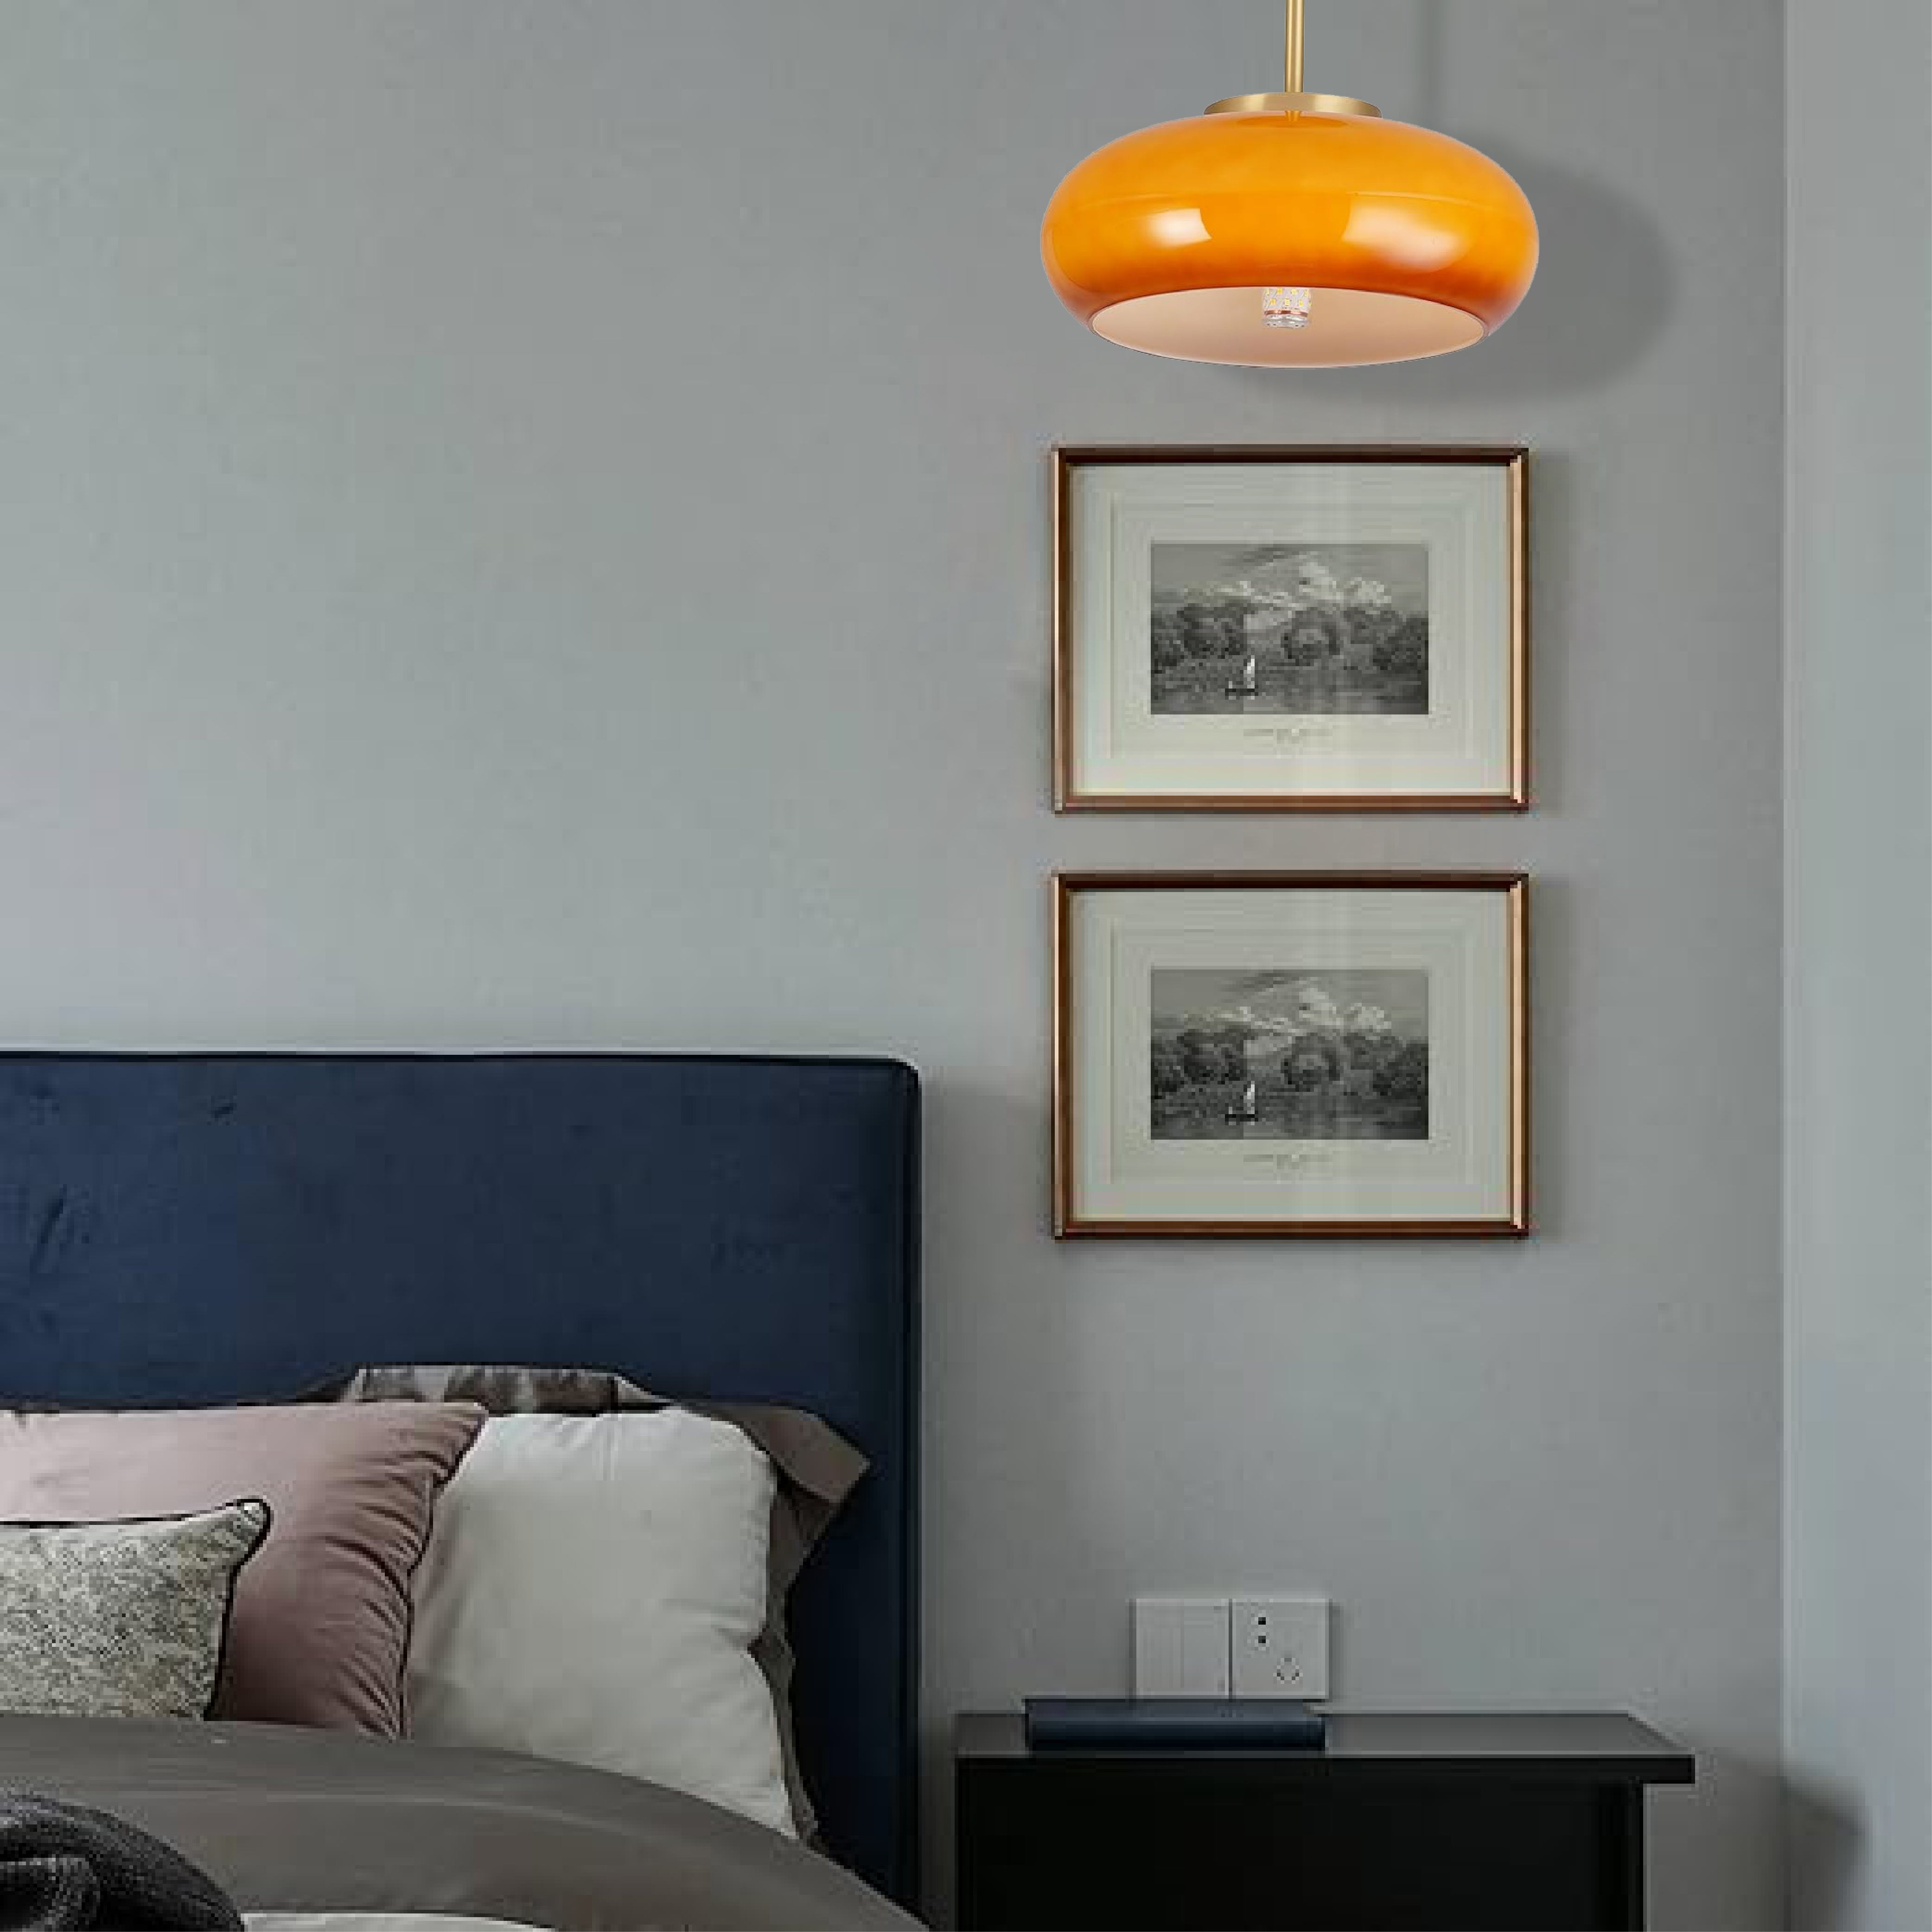 Modern light fixtures Orange kitchen light Metal chandelier light